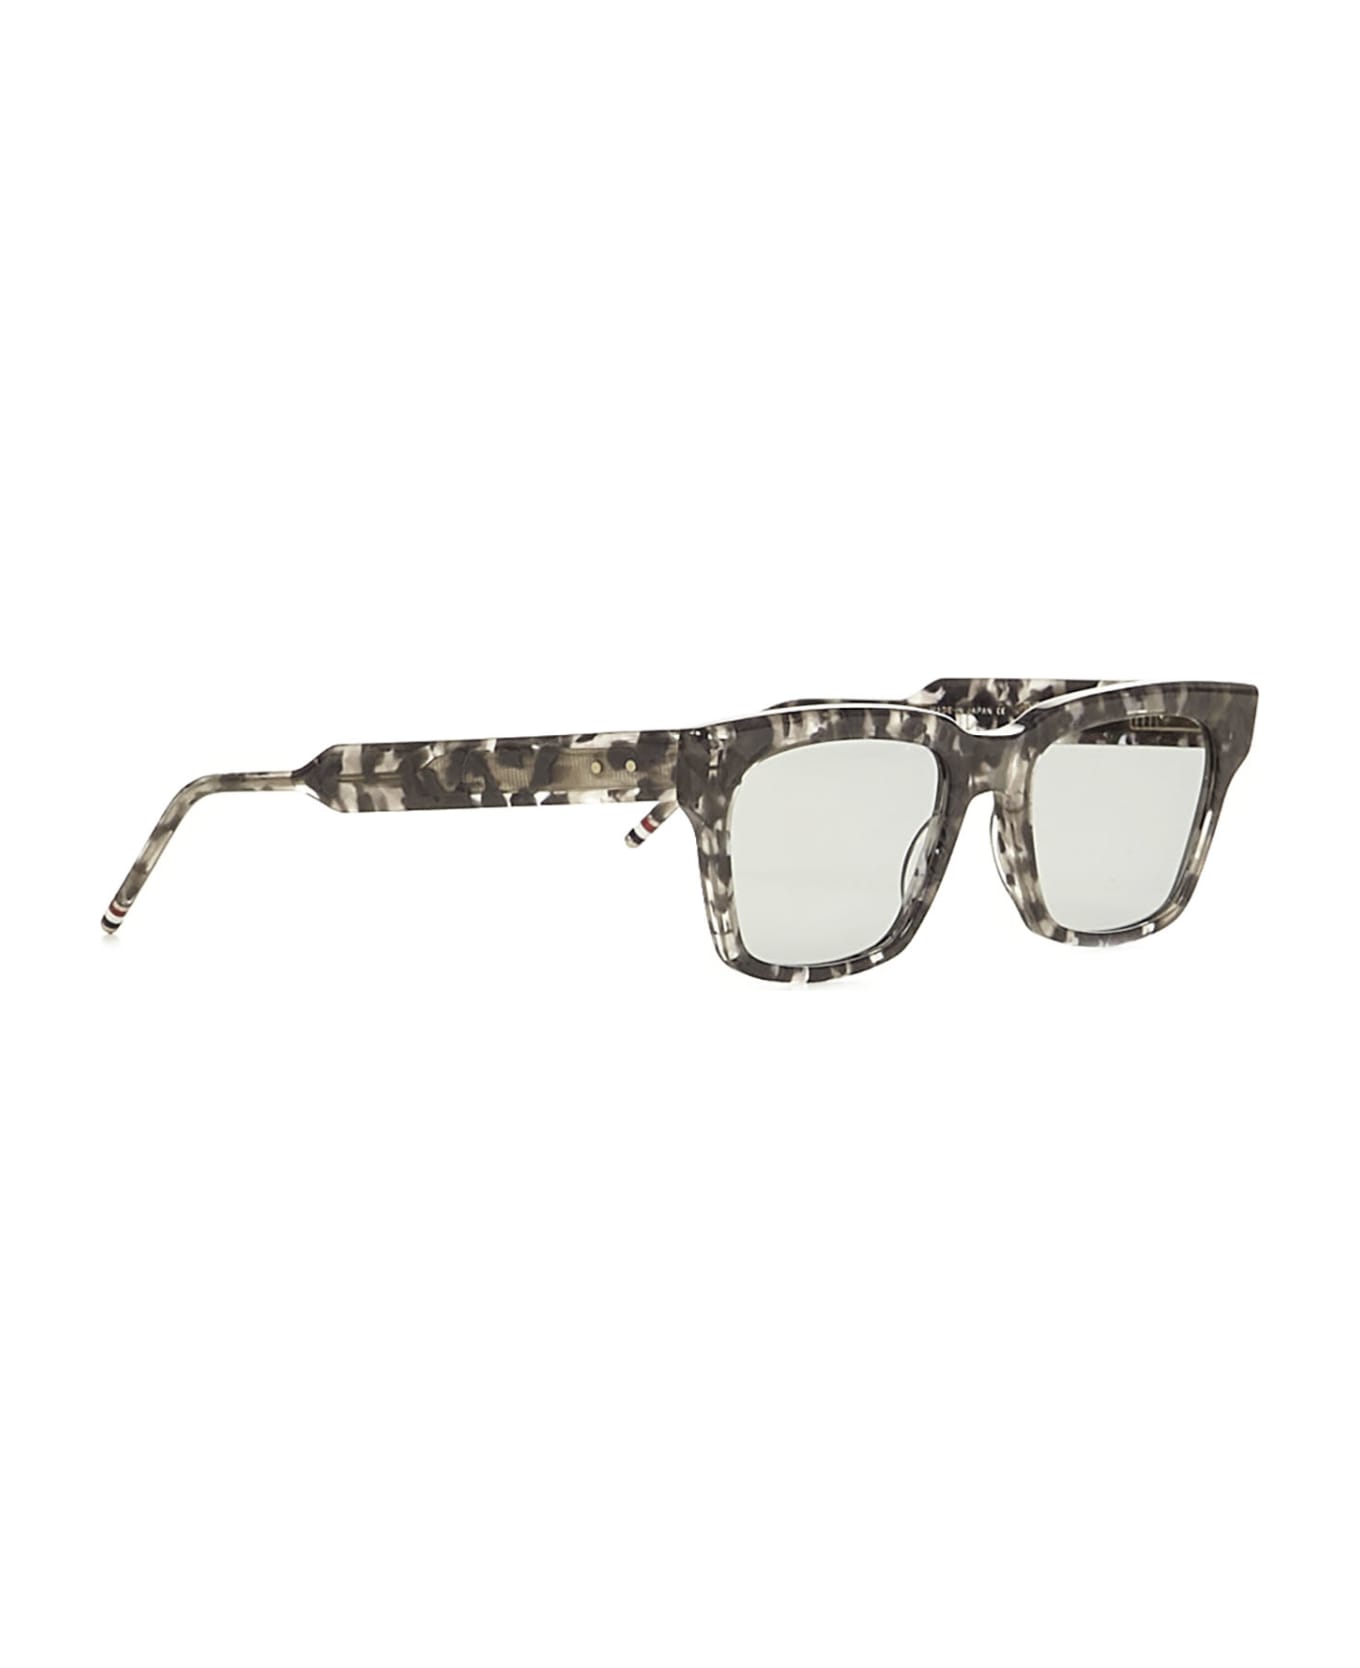 Thom Browne Sunglasses Tb418 Sunglasses - Dove Grey